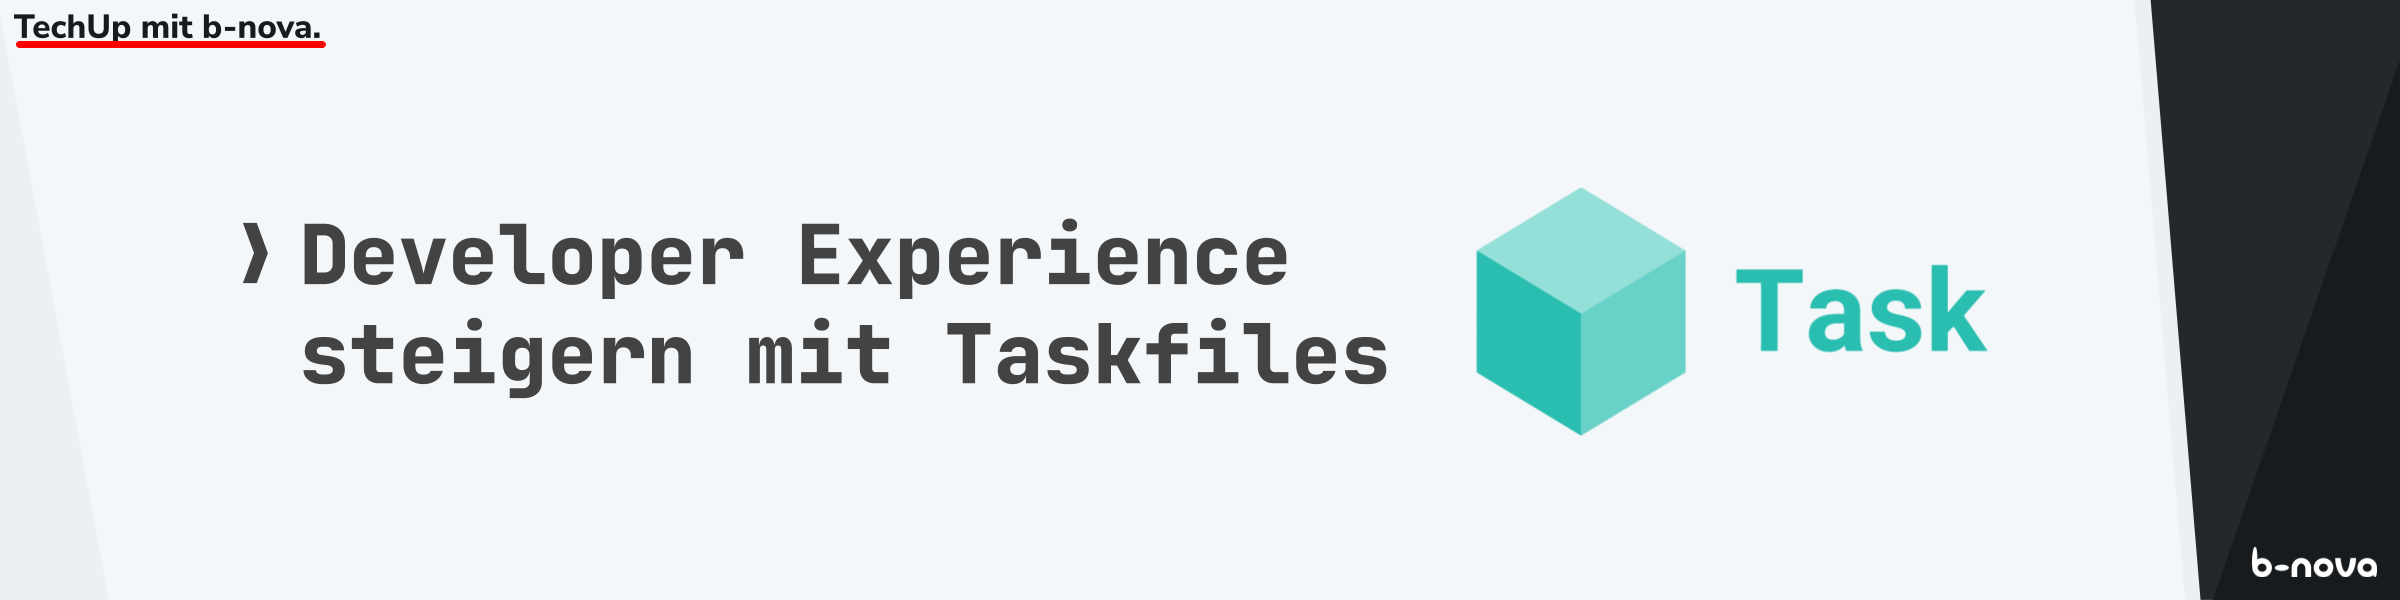 taskfile-banner